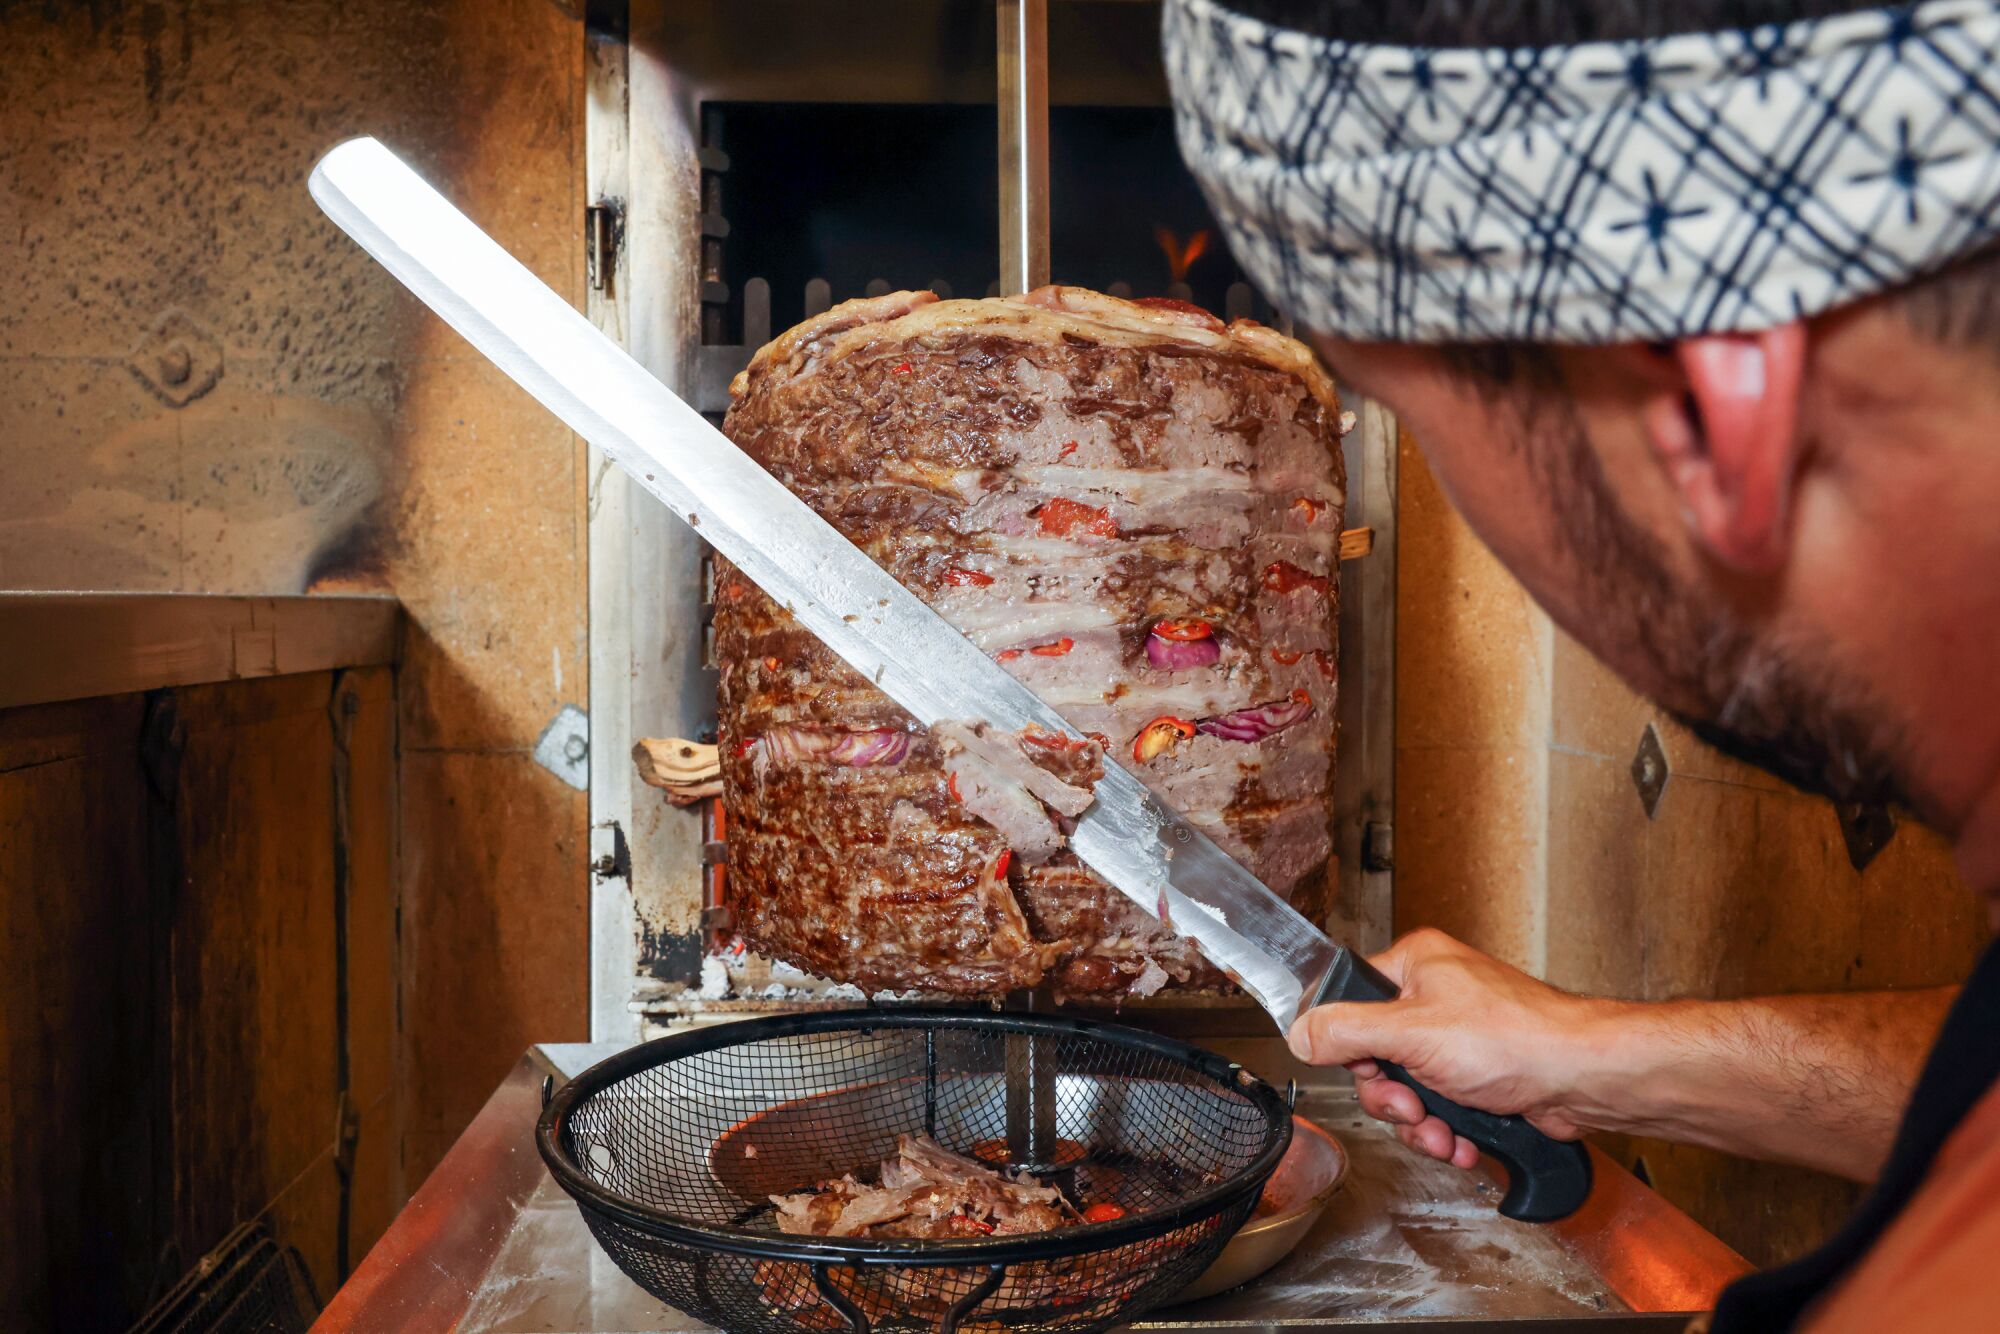 Ori Menashe carving shawarma off the turning spit.